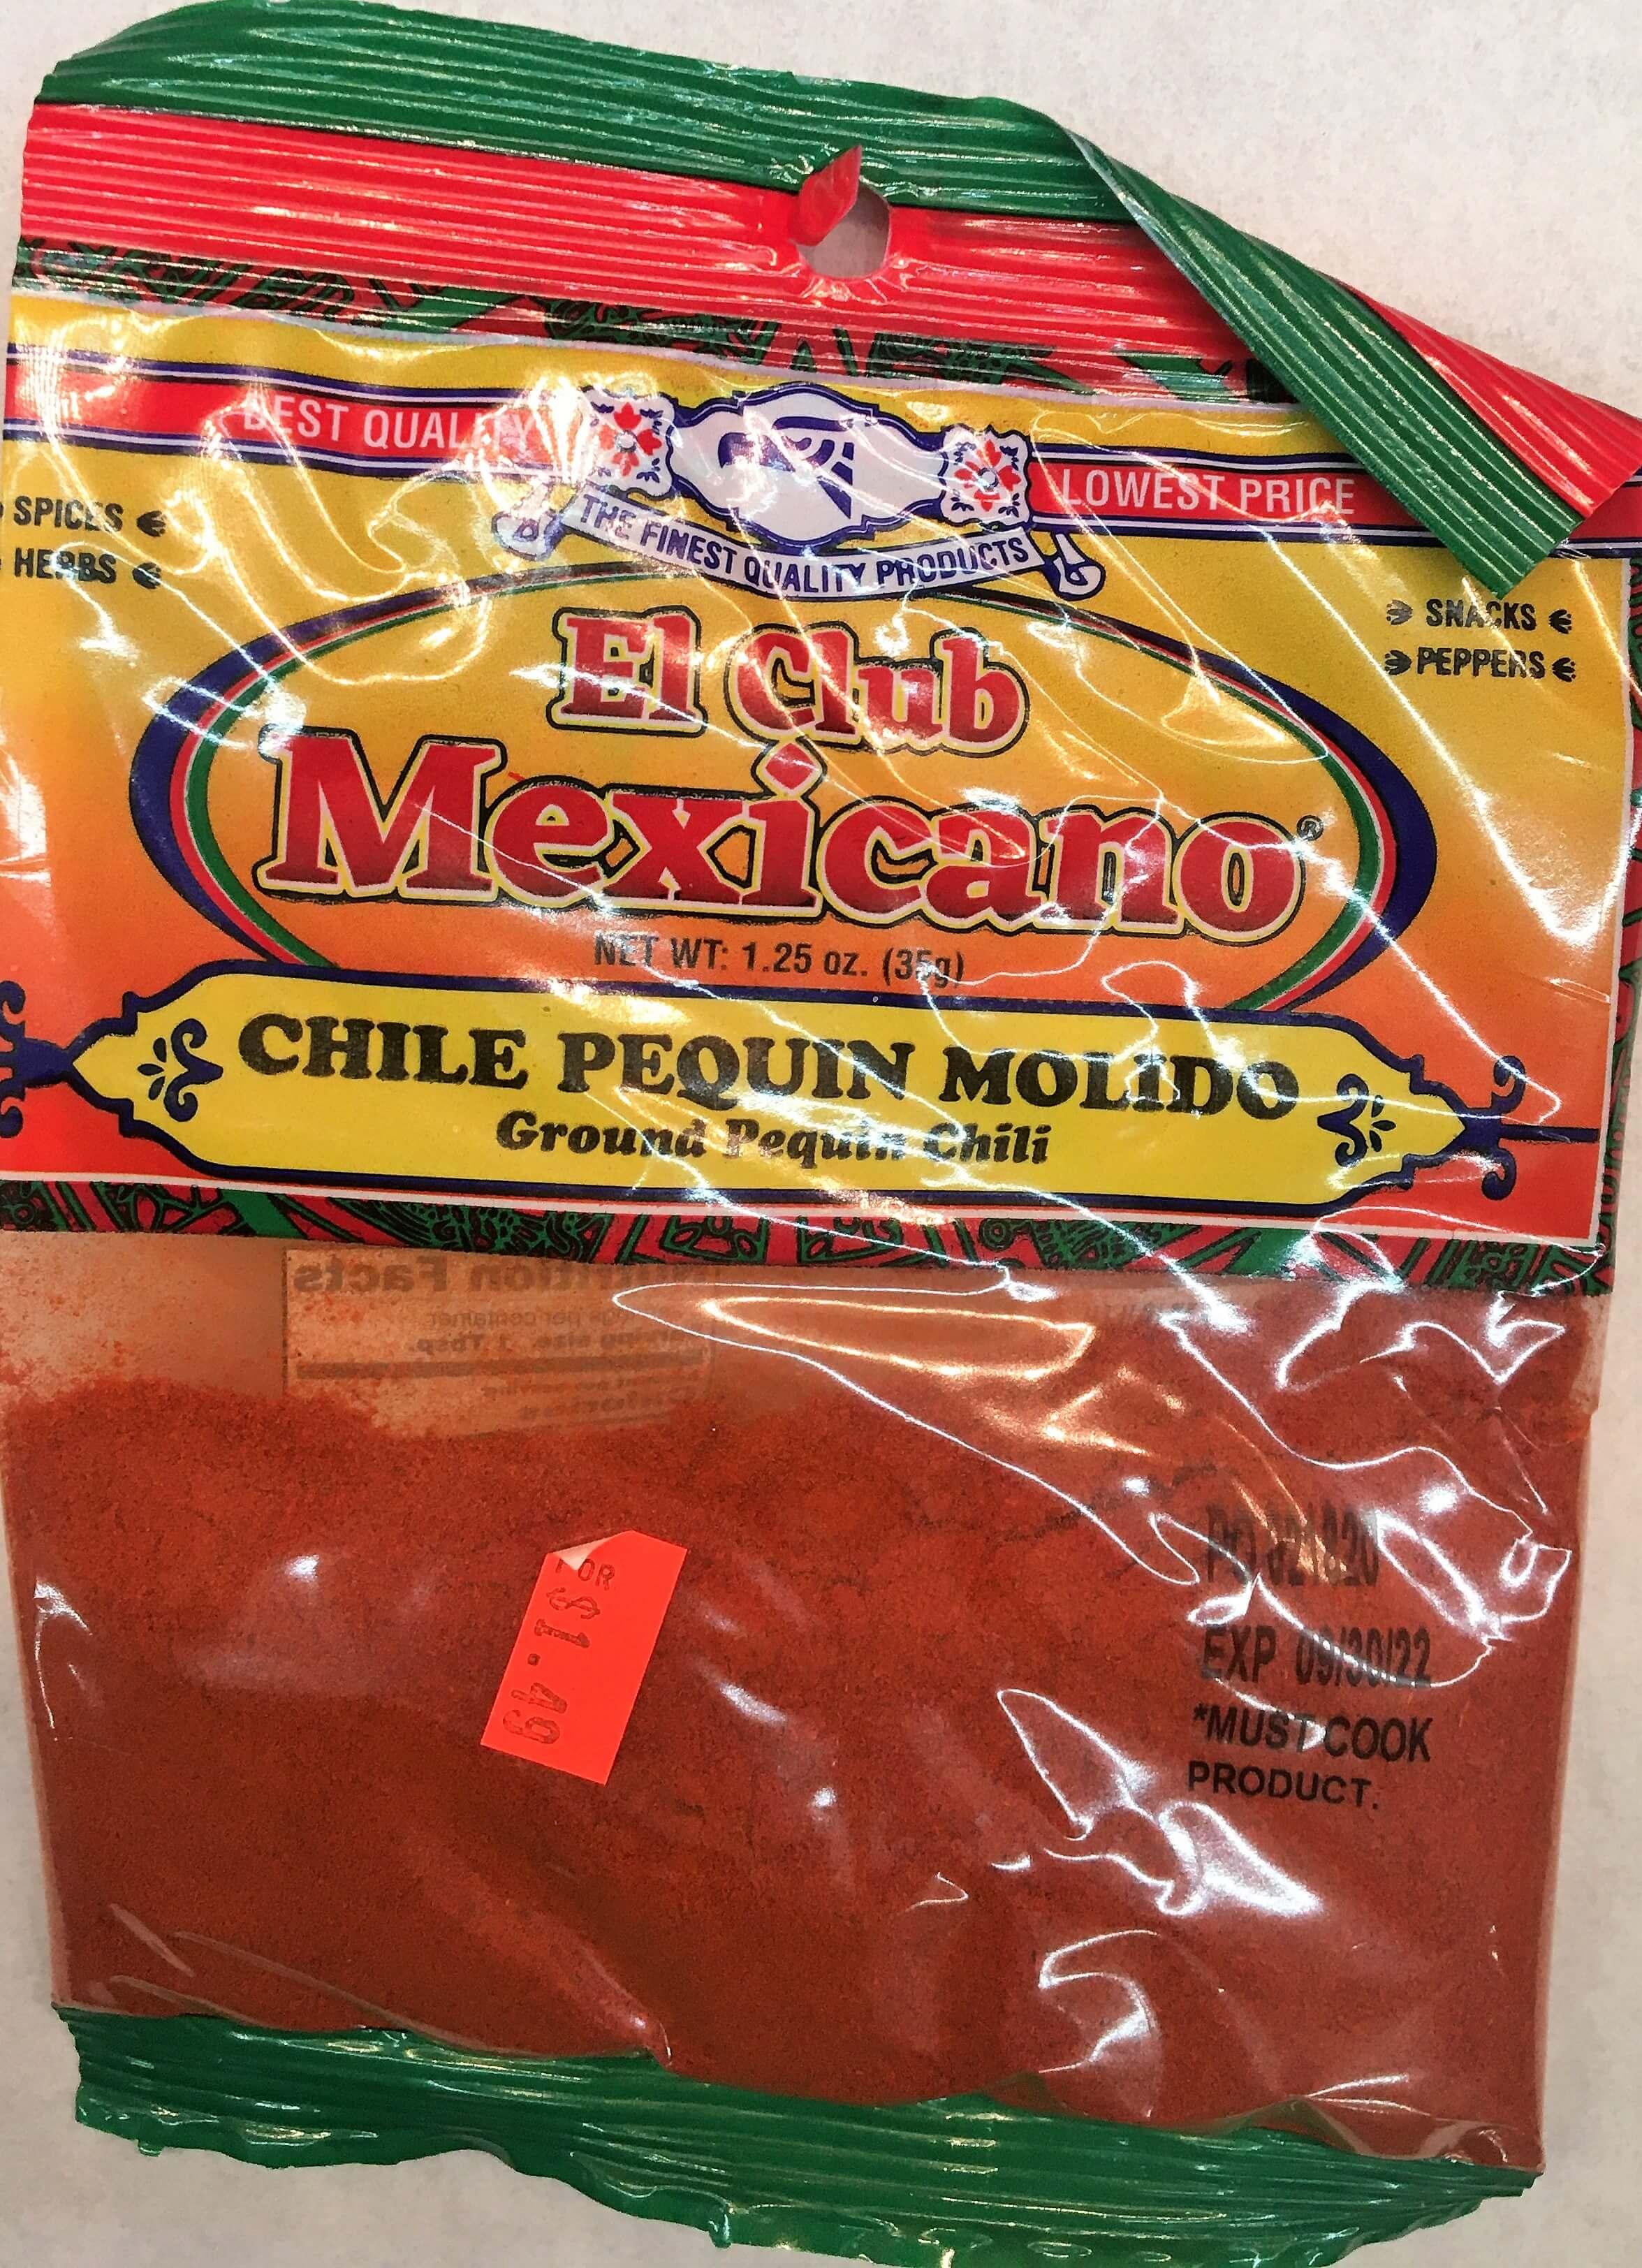 El Club Mexicano - Ground Pequin Chili 1.25 oz.